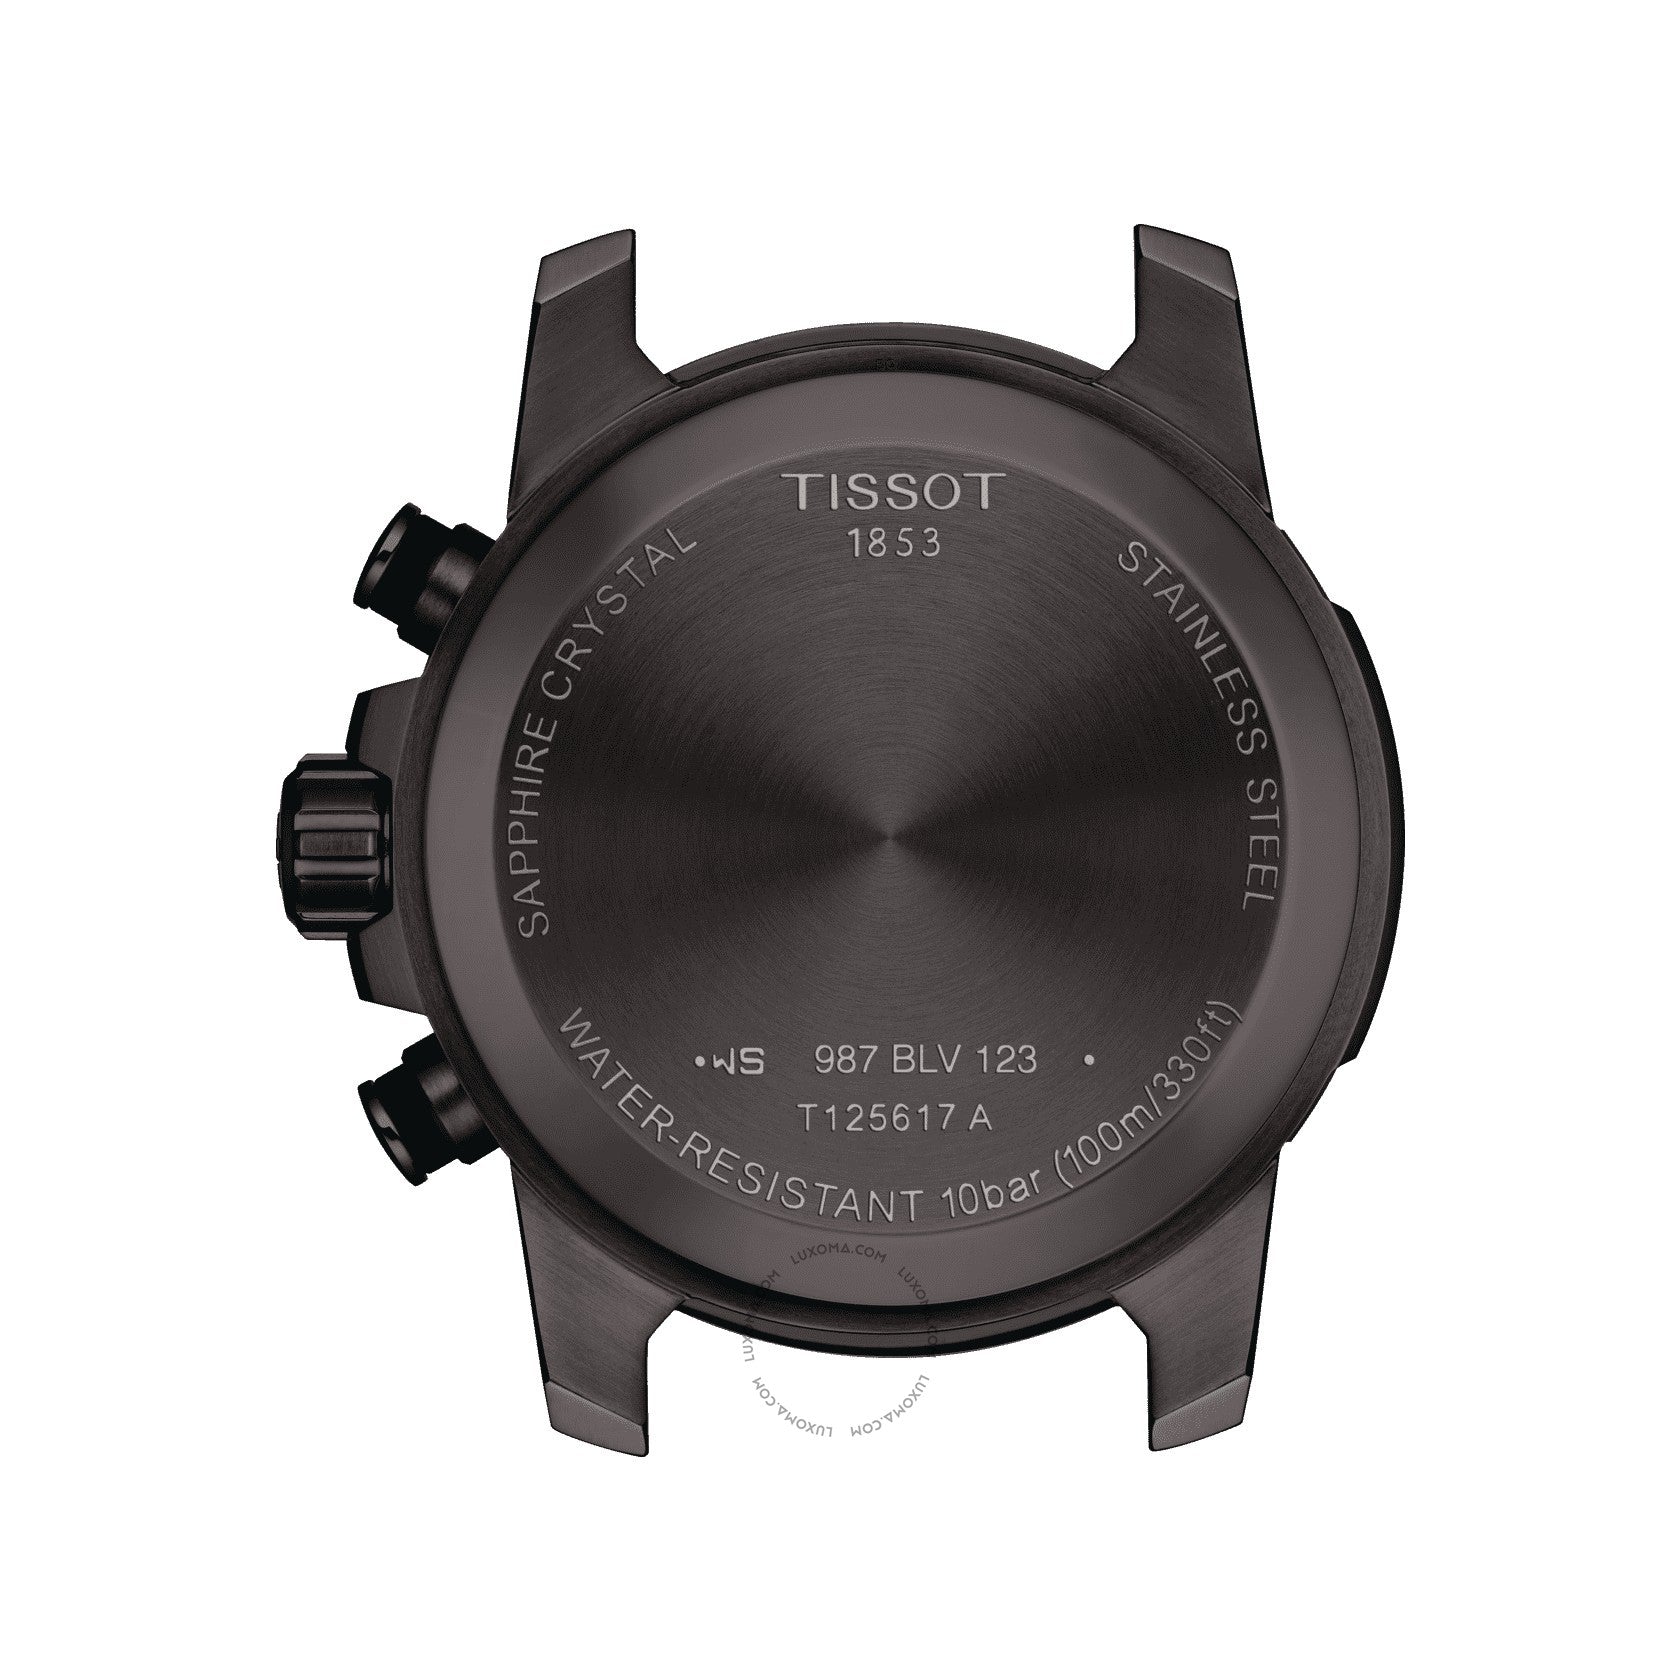 Tissot Tissot Supersport Chronograph Black Dial Men's Watch T125.617.36.051.01